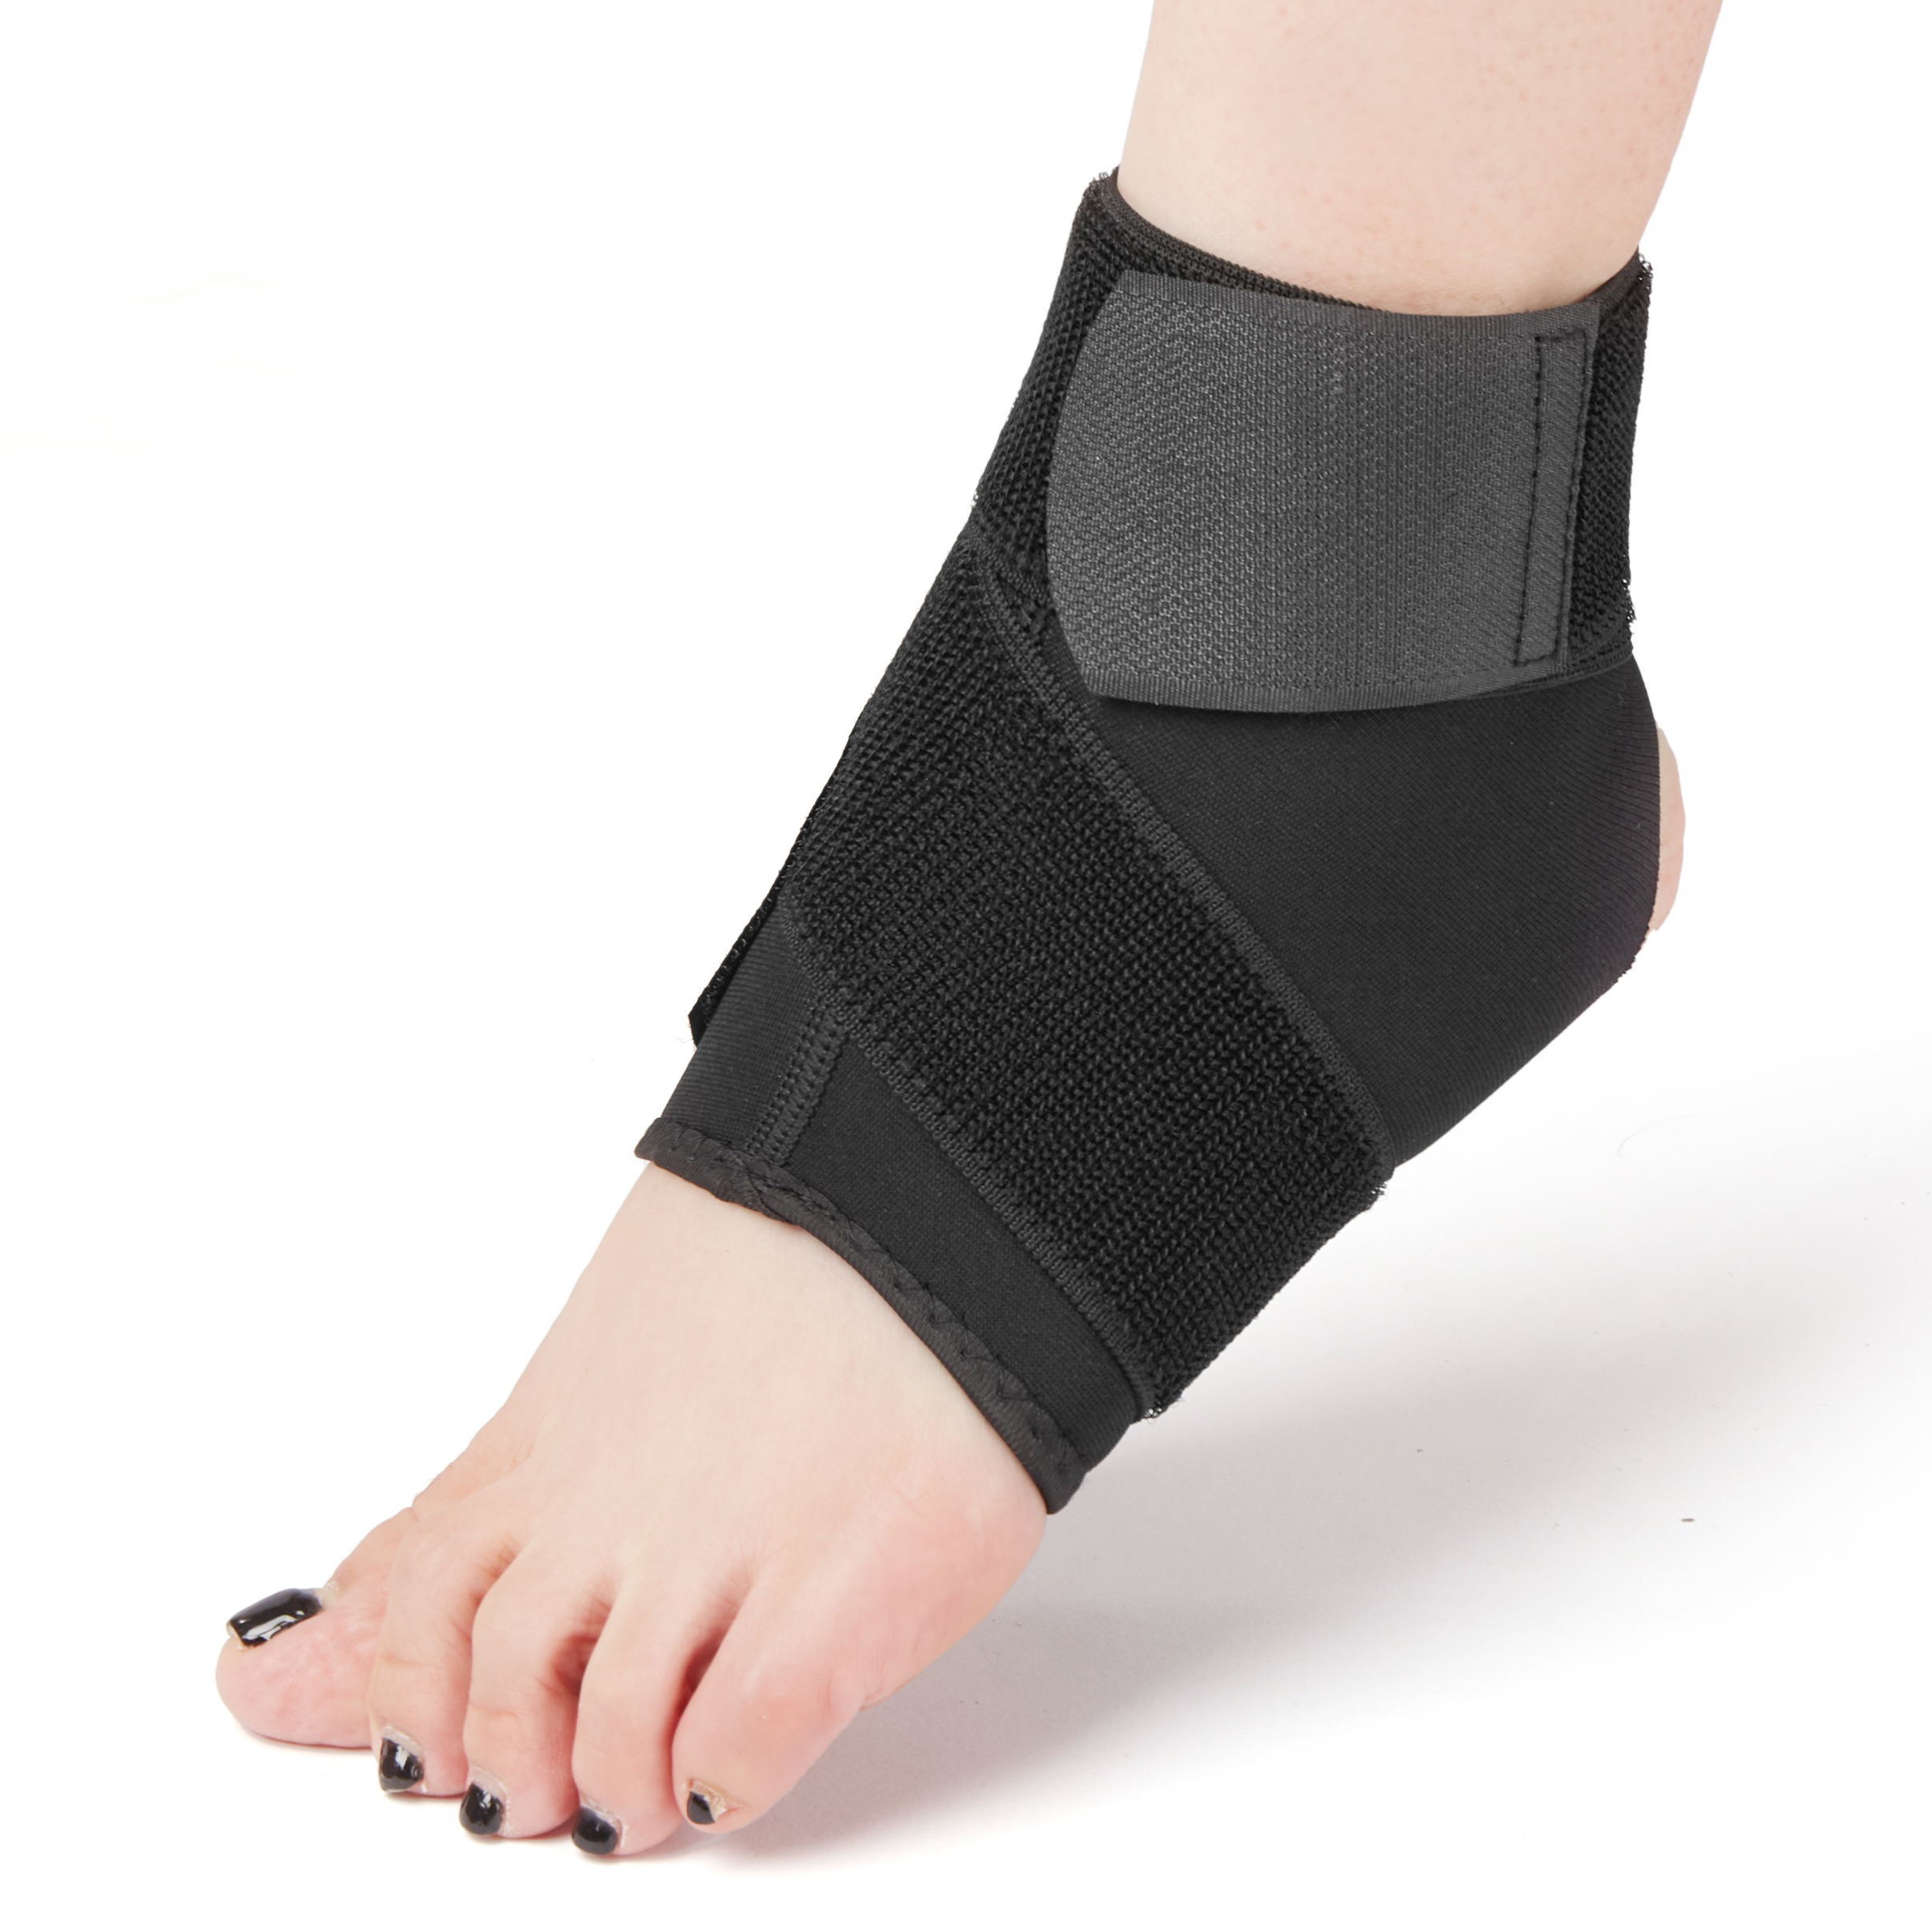 Breathable Neoprene Adjustable Compression Ankle Guard